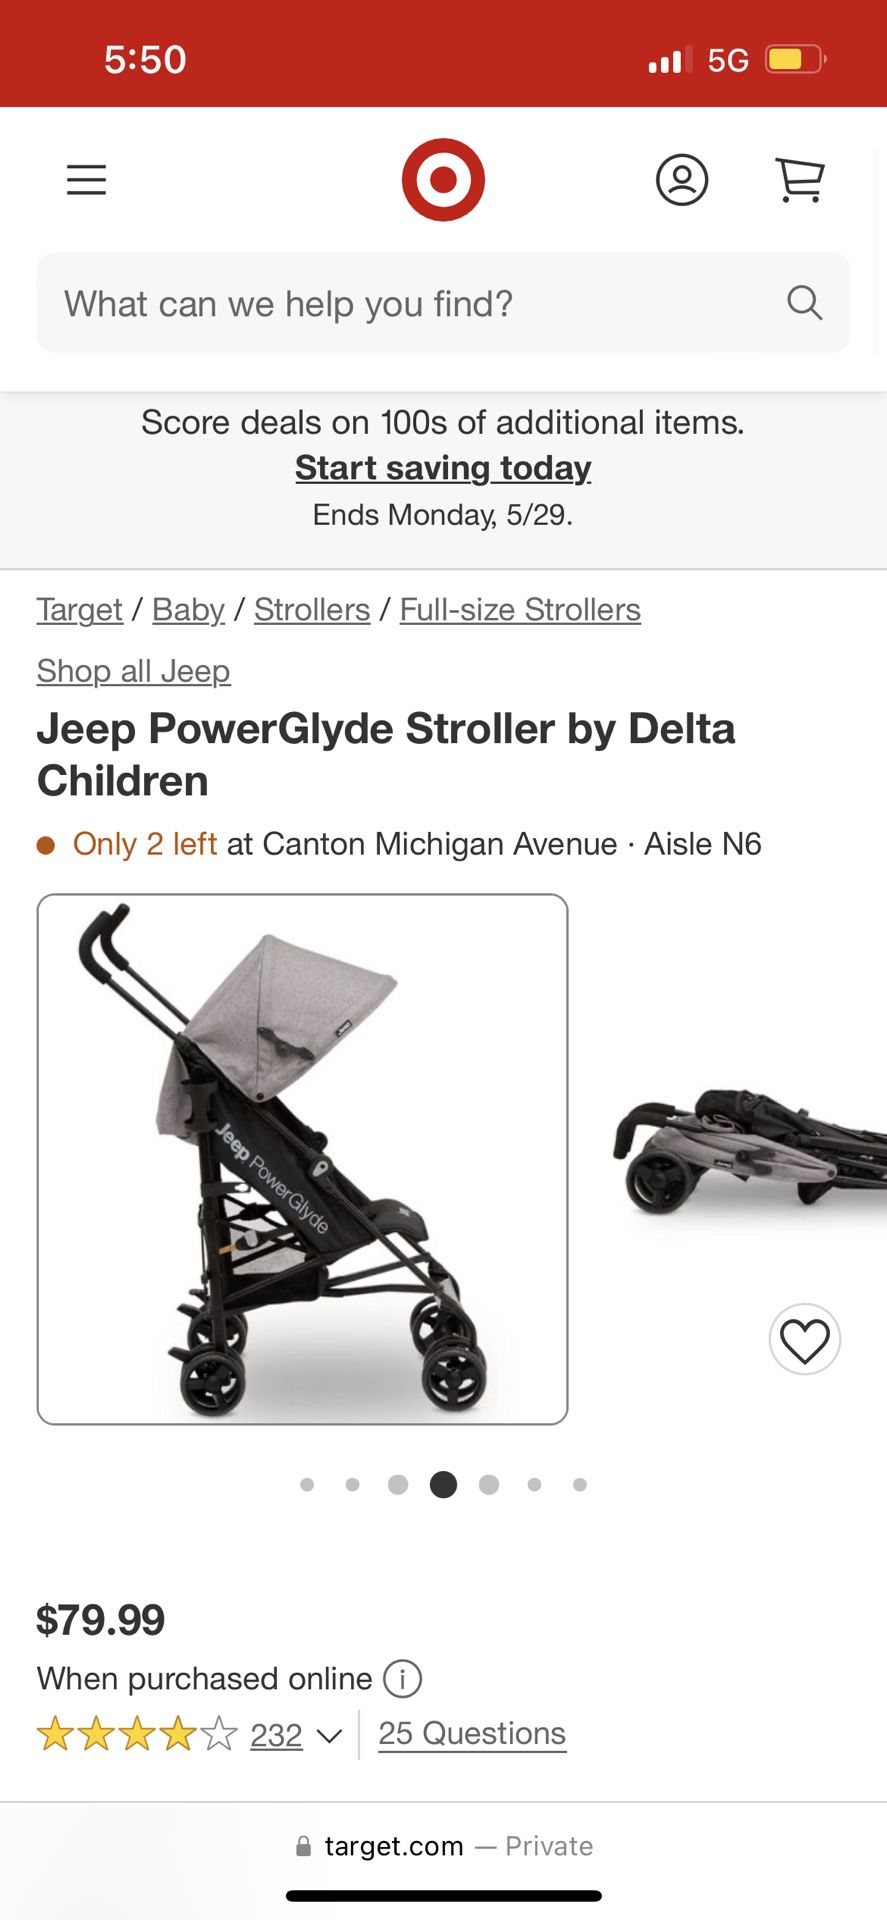 New Jeep PowerGlyde Stroller